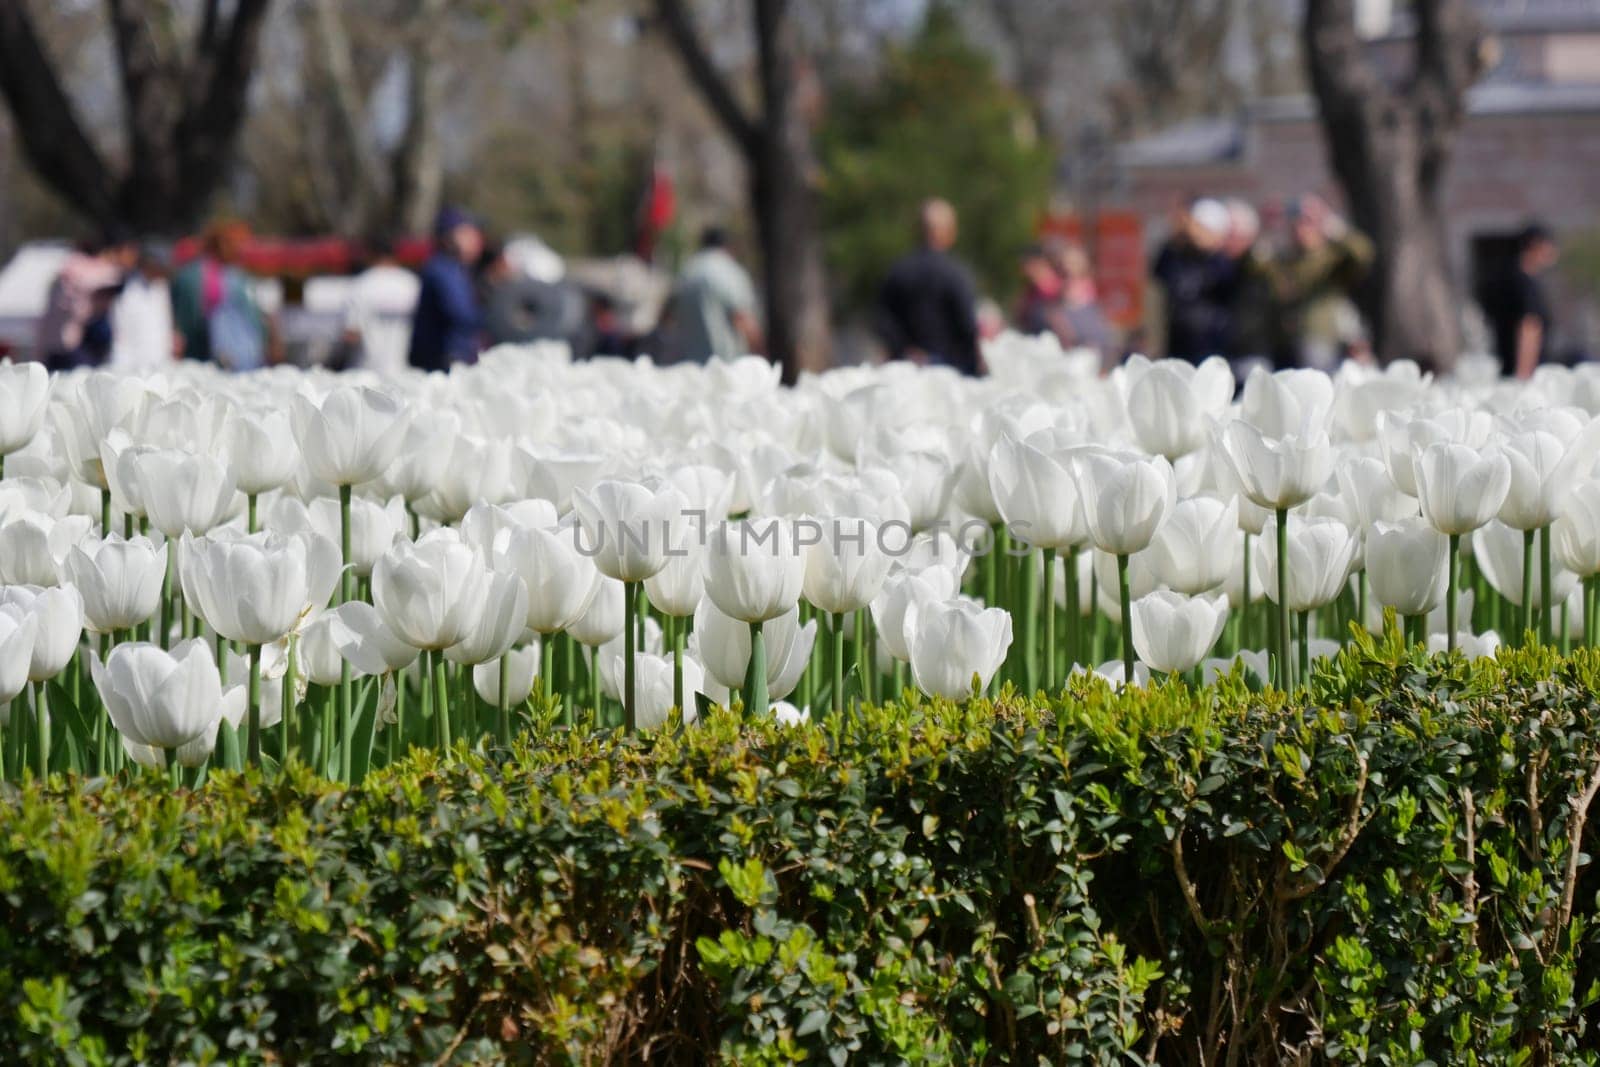 white tulips in a garden at popular tourist destination by towfiq007